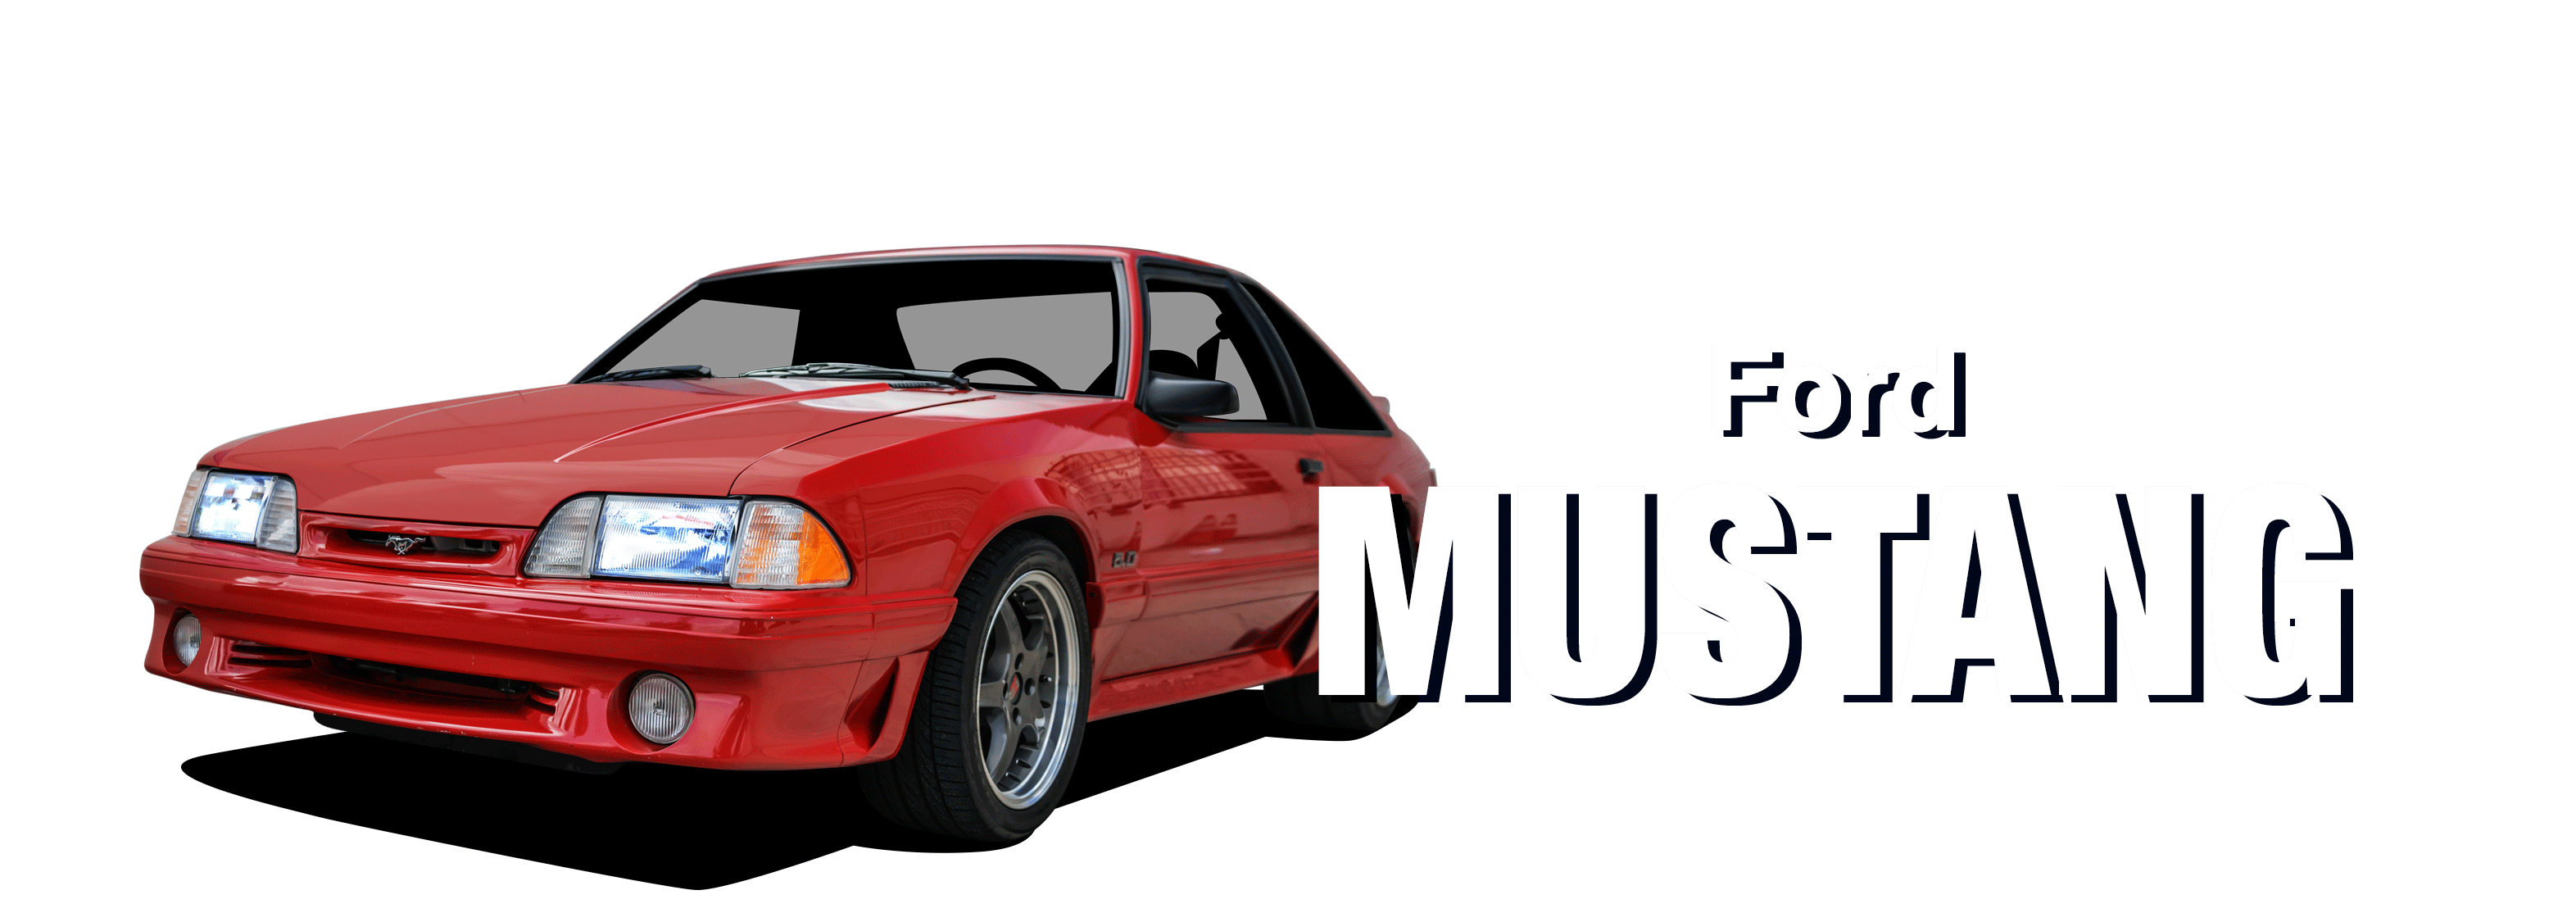 Mustang-FoxBody-vehicle-desktop